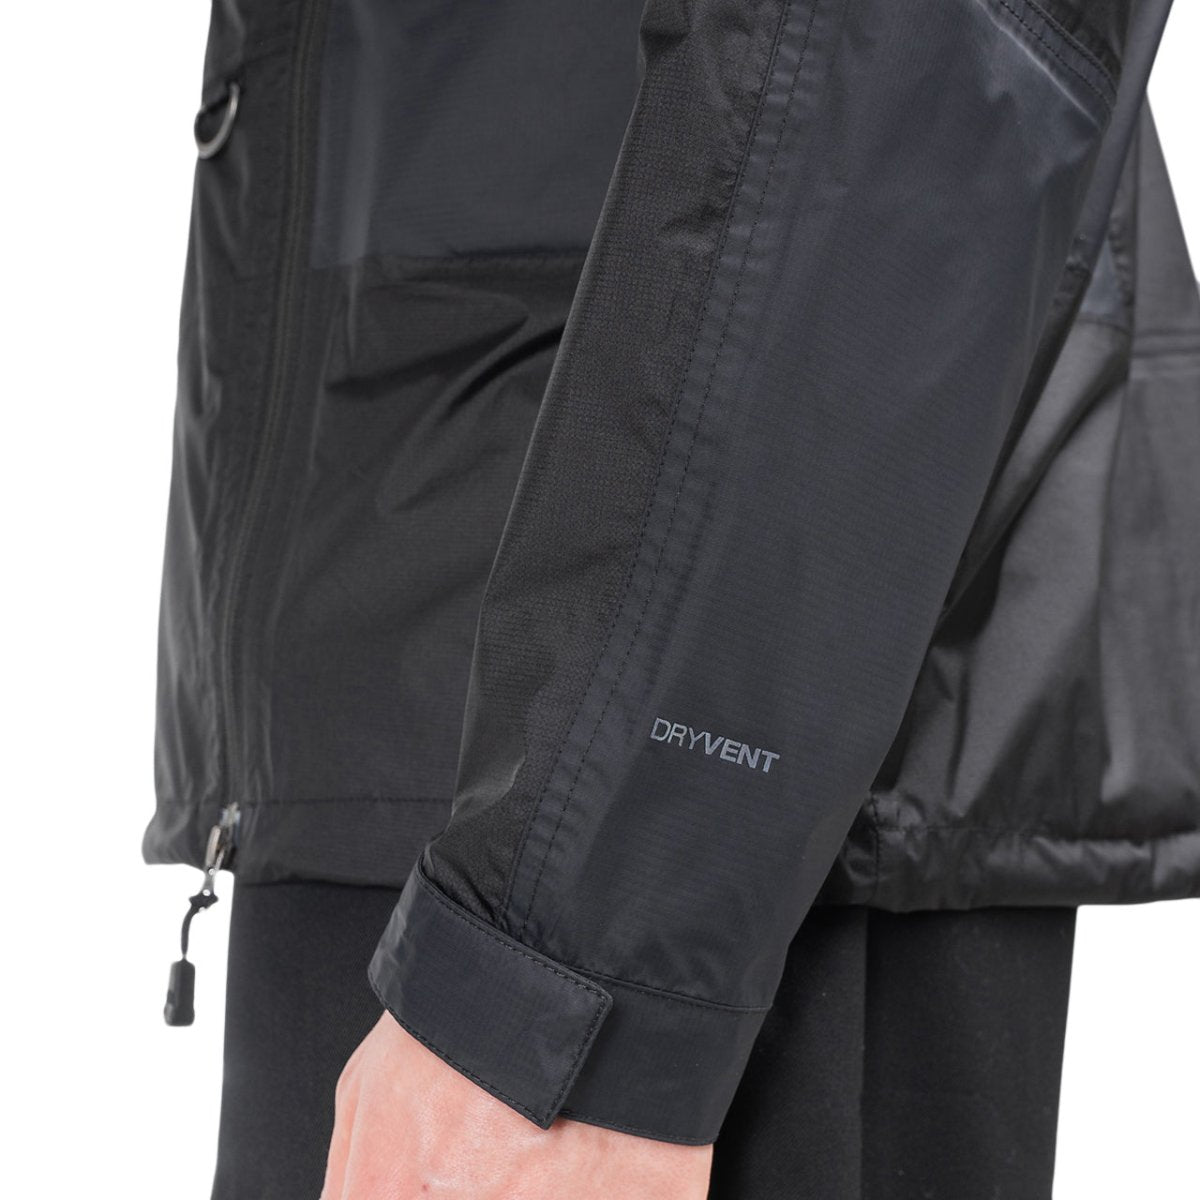 The North Face Steep Tech Light Rain Jacket (Schwarz)  - Allike Store